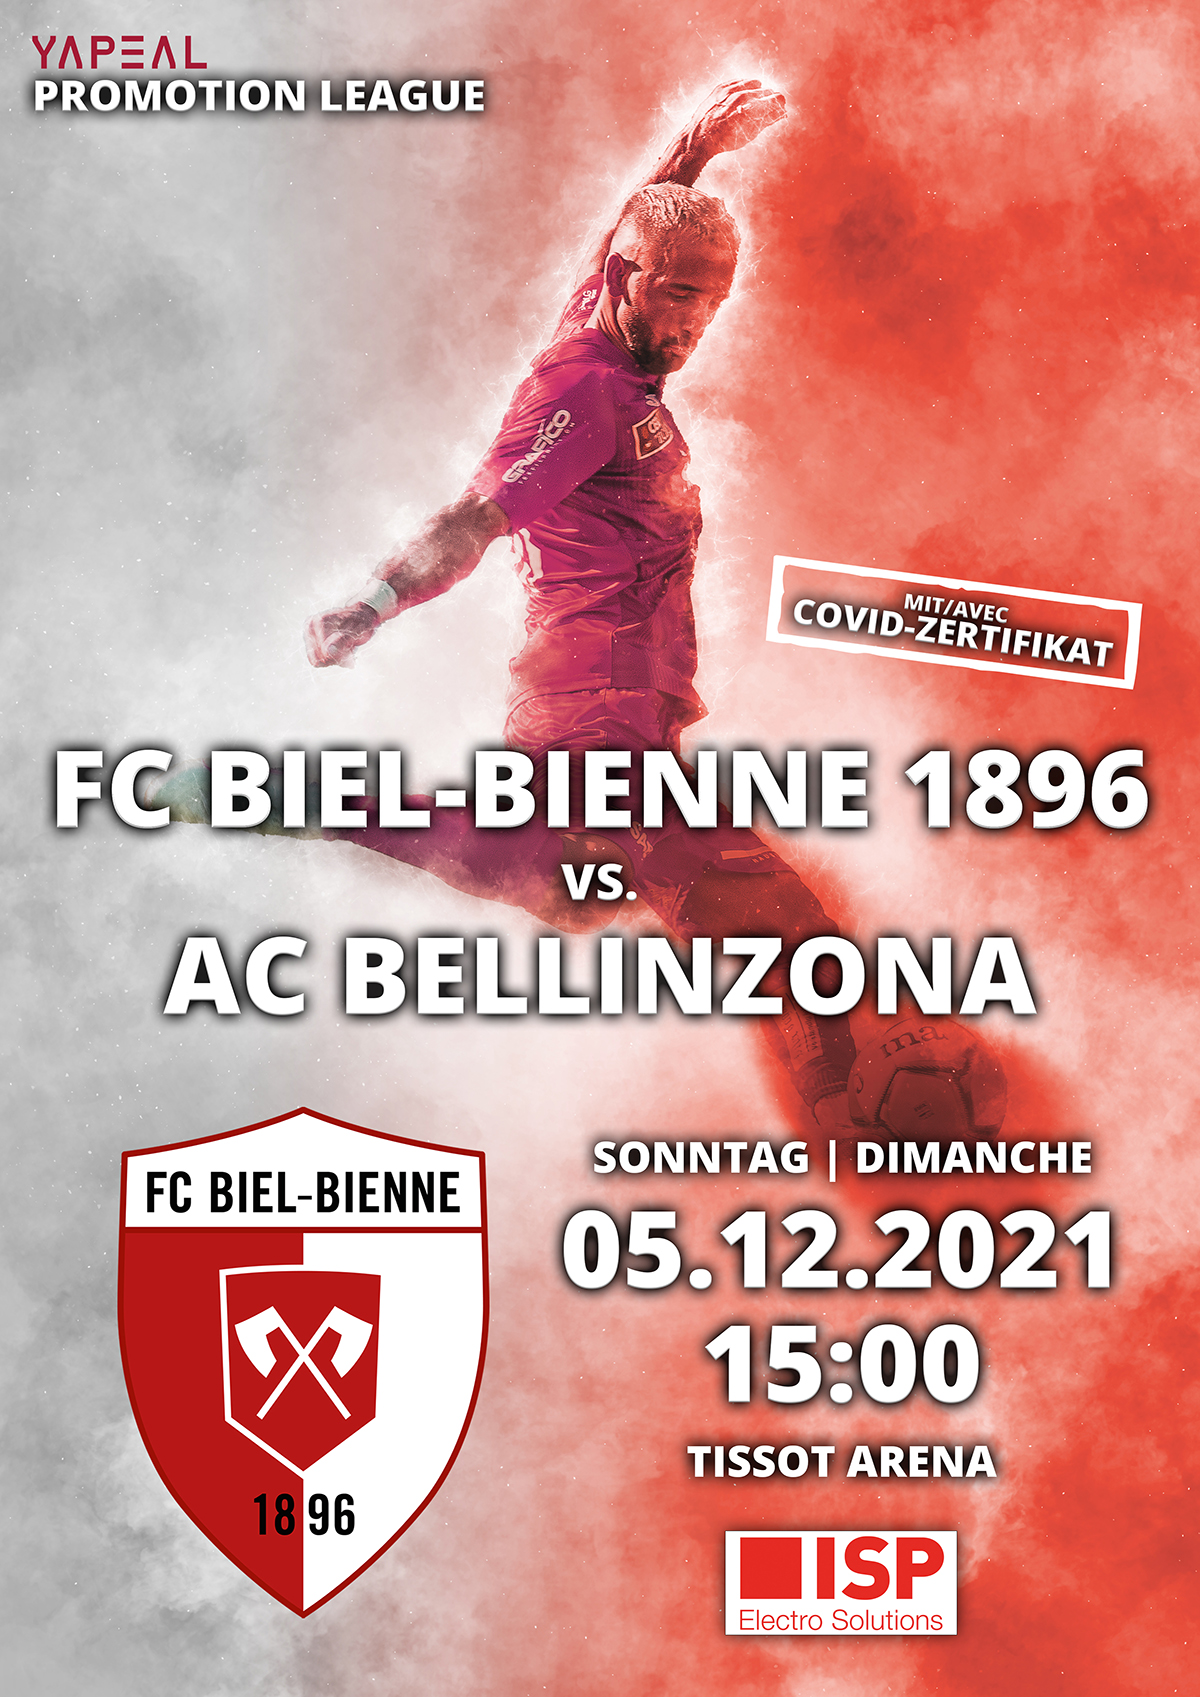 FC Biel-Bienne 1896 vs. AC Bellinzona